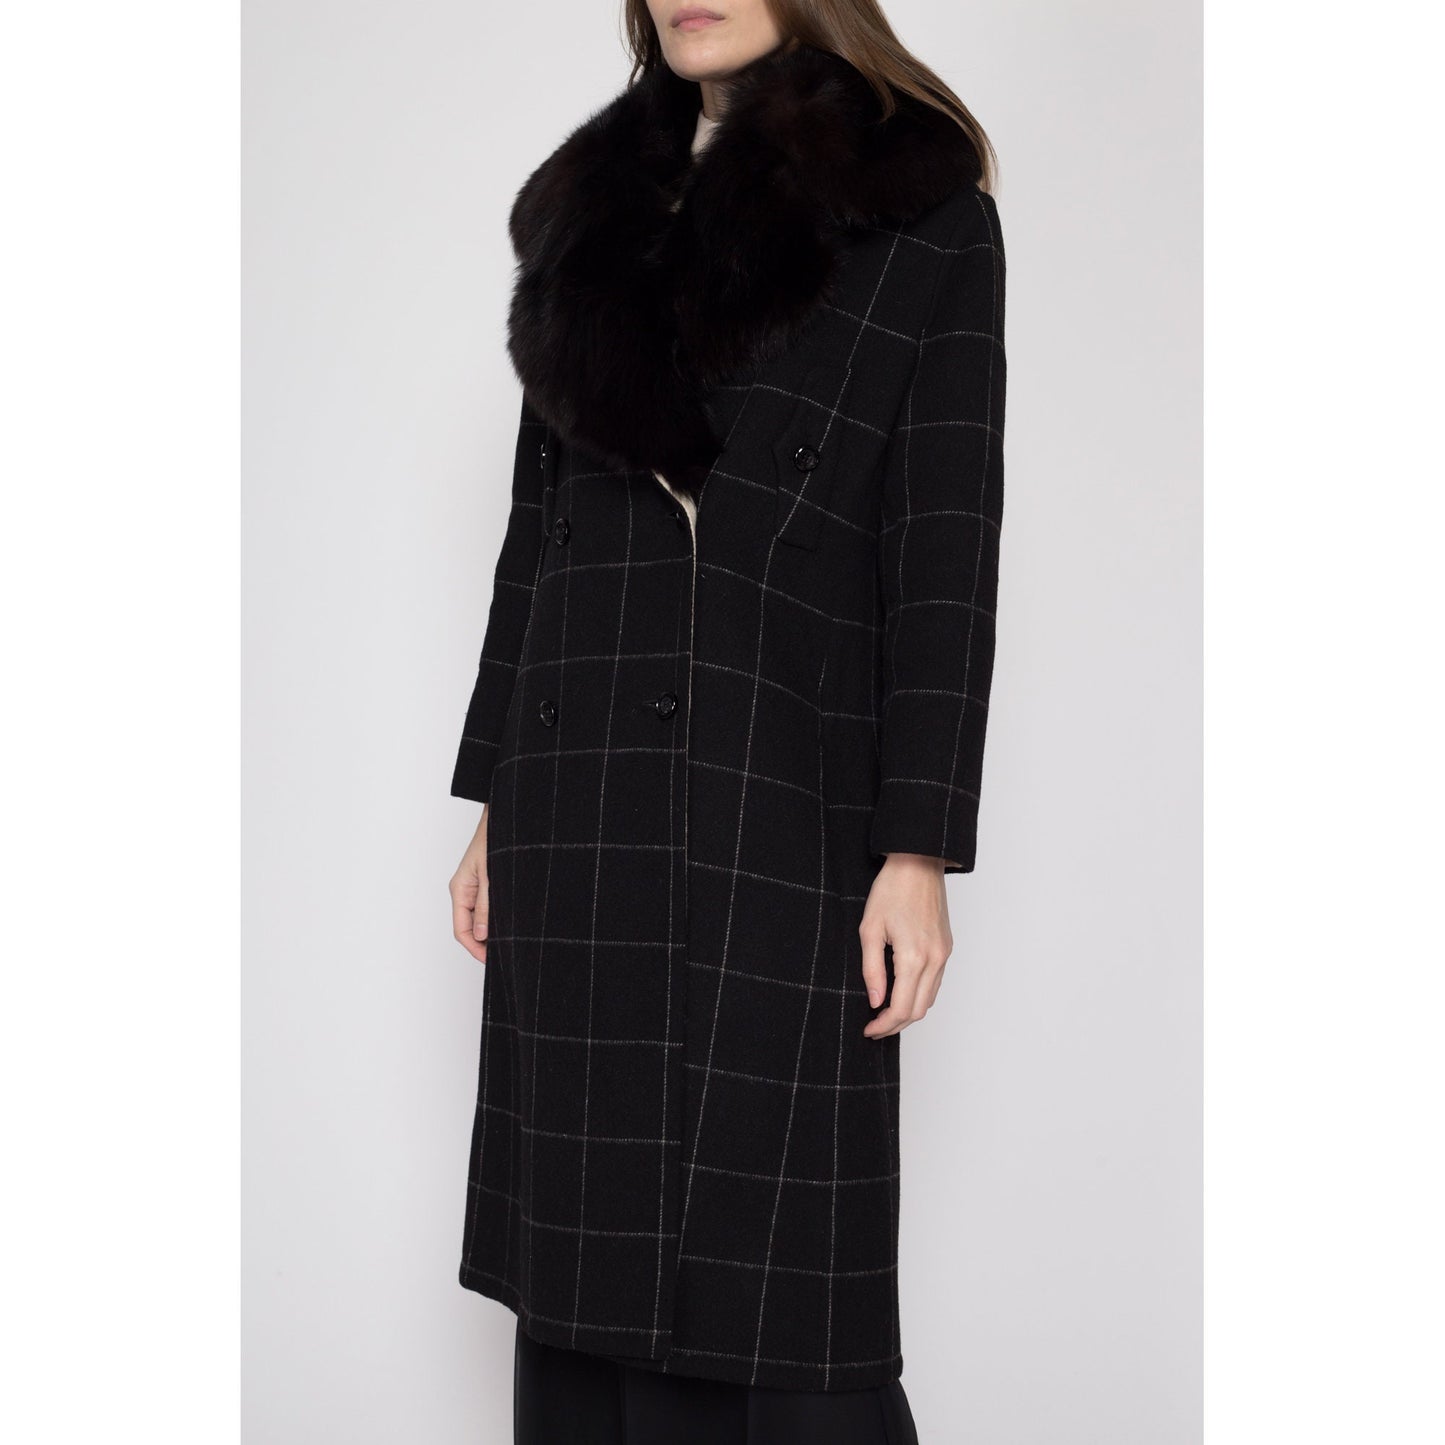 Sm-Med 70s Galanos Designer Wool Fur Collar Overcoat | Vintage Grid Pattern Double Breasted Winter Blanket Jacket